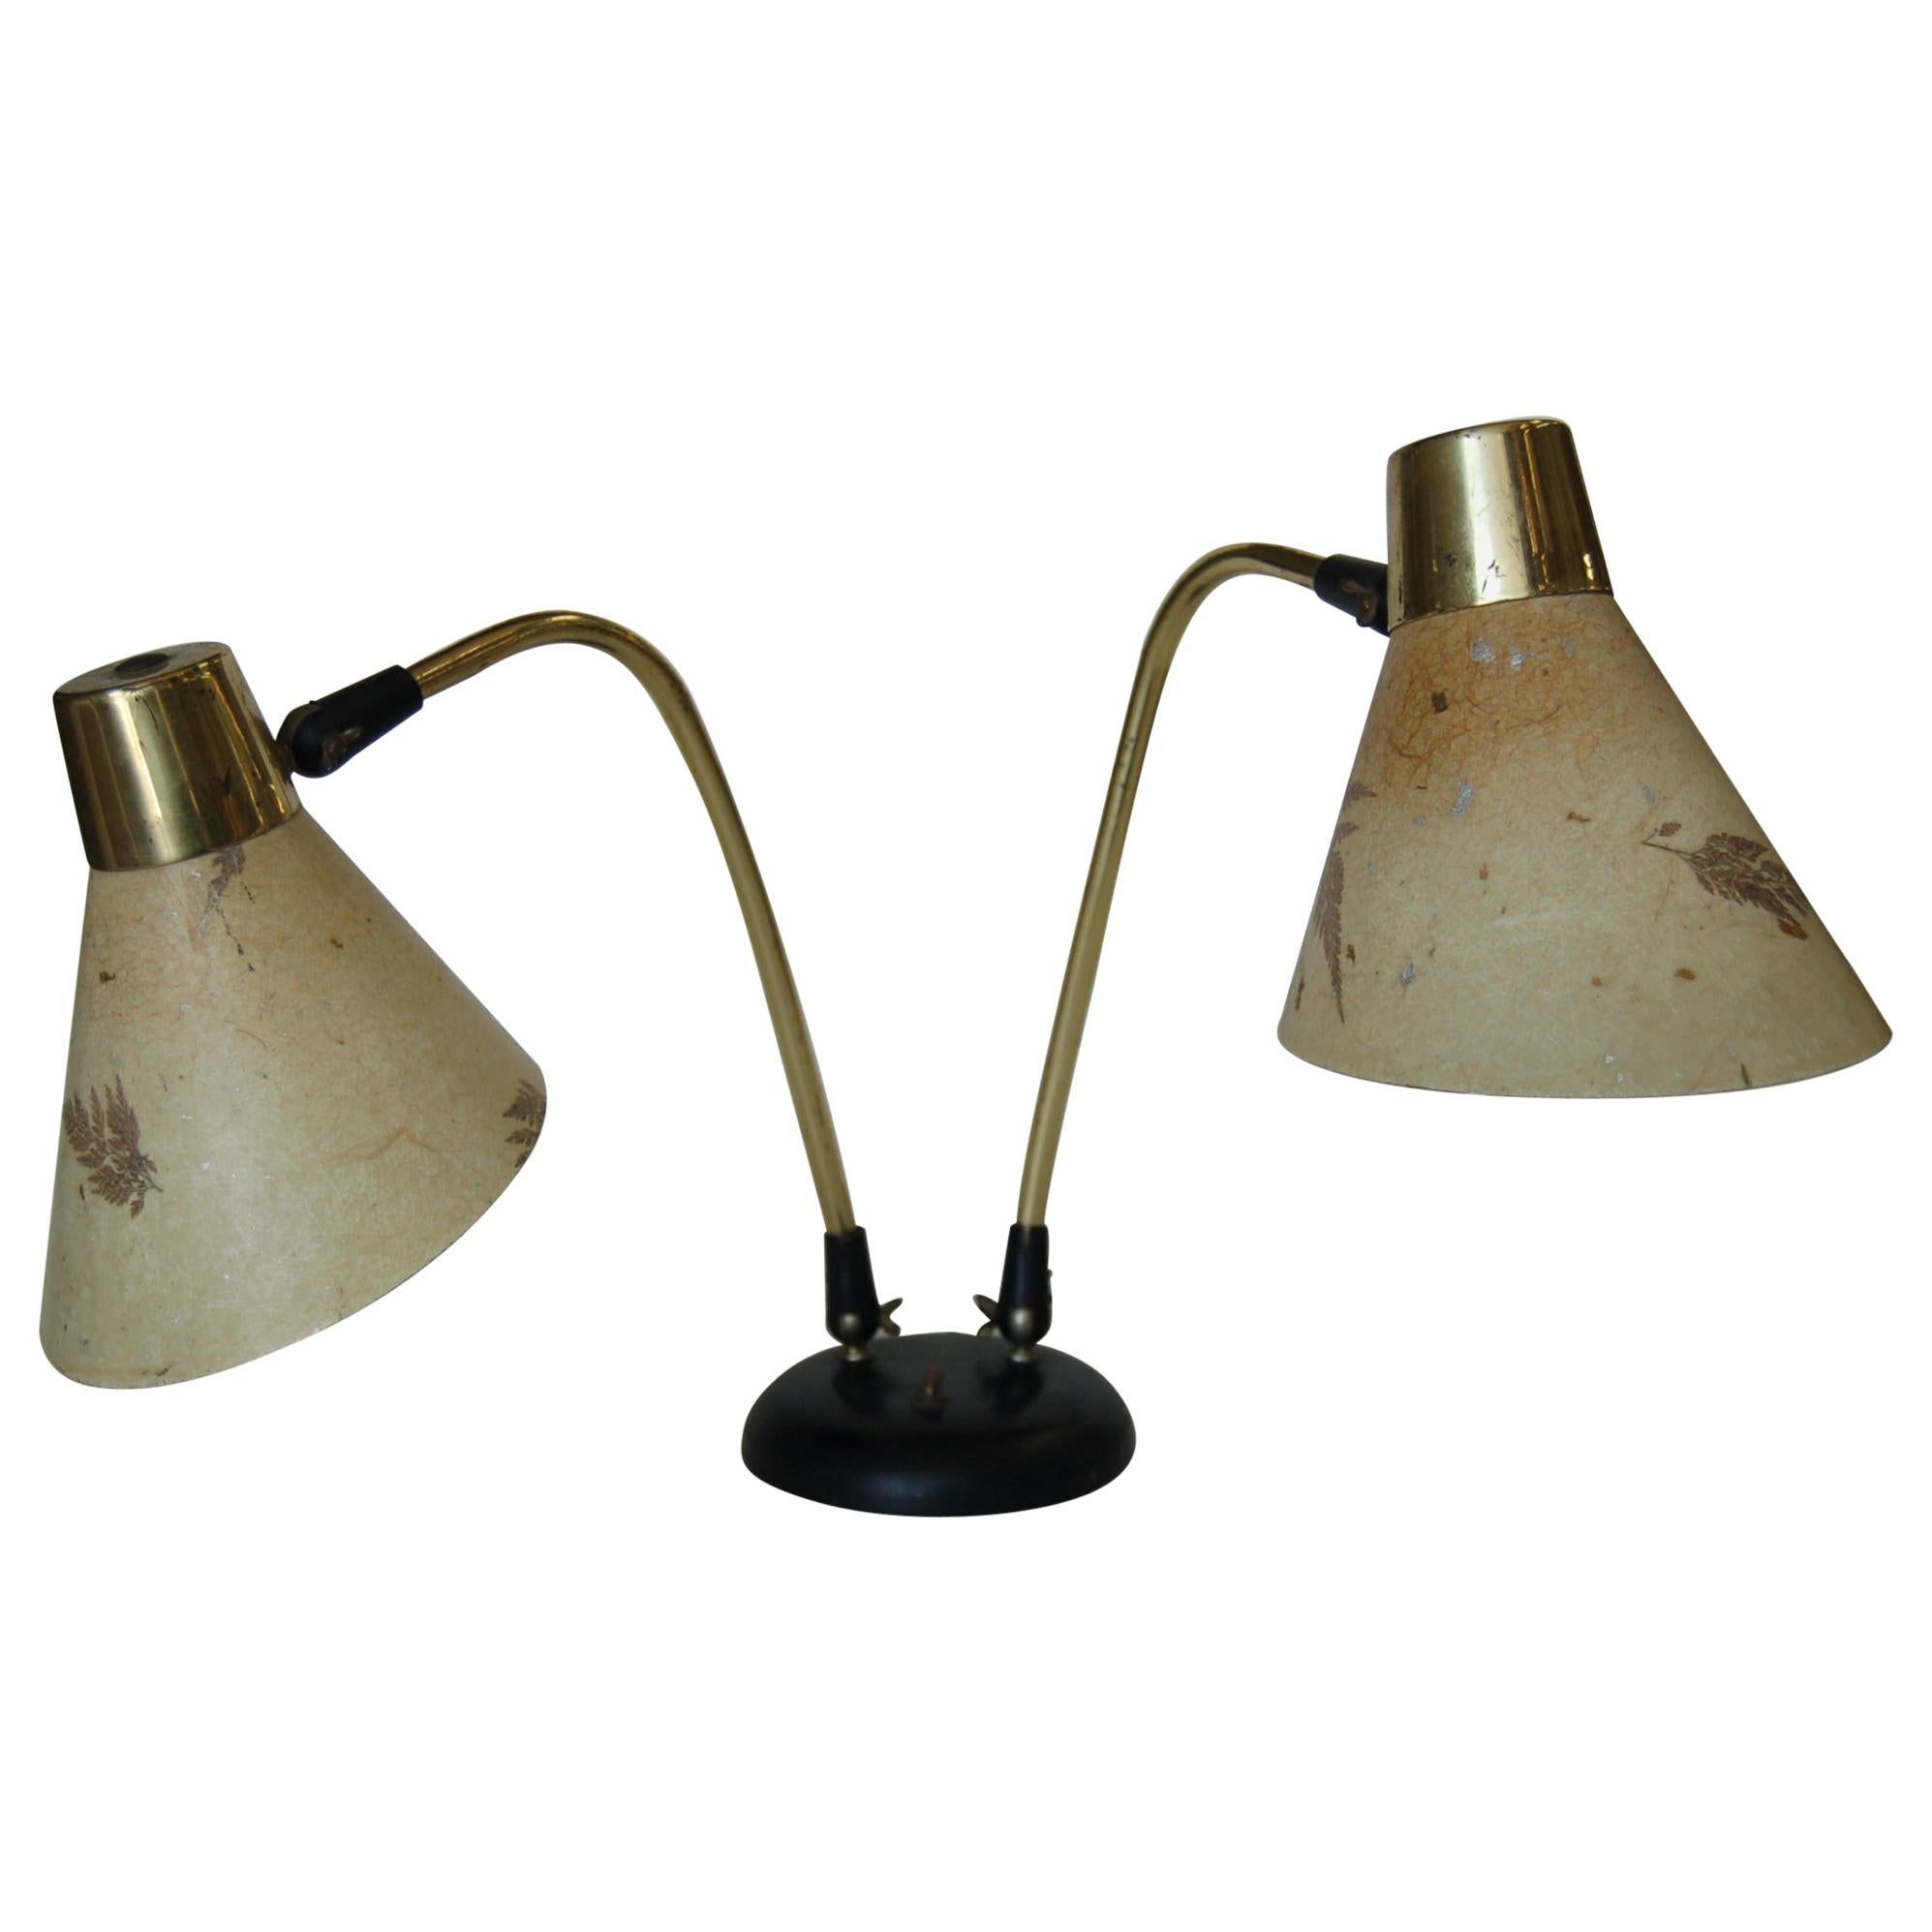 Double Gooseneck Brass Desk Table Lamp with Pressed Floral Fiberglass